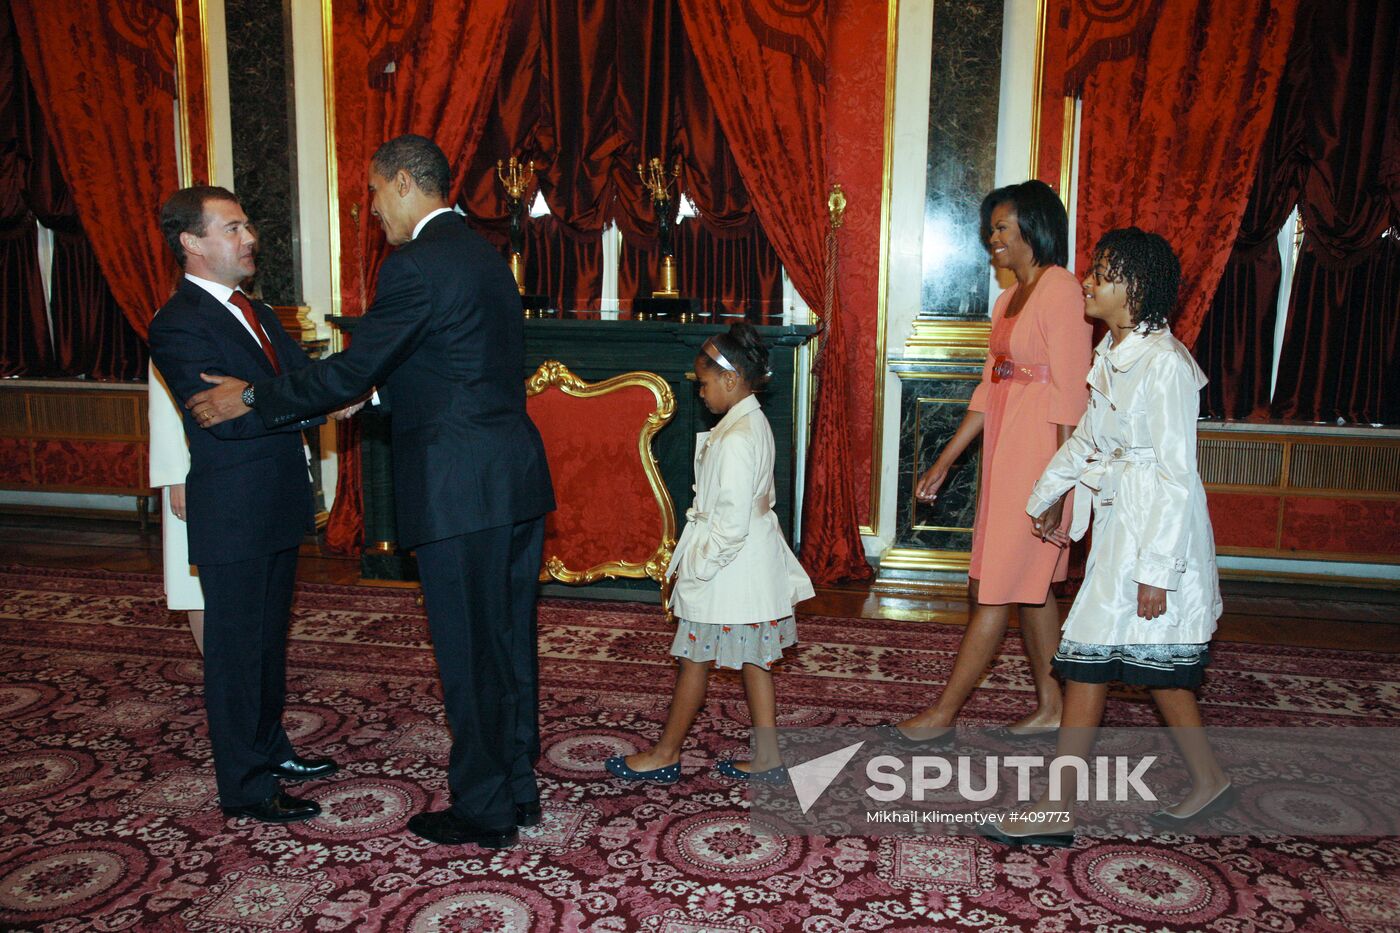 U.S. President Barack Obama visits Russia